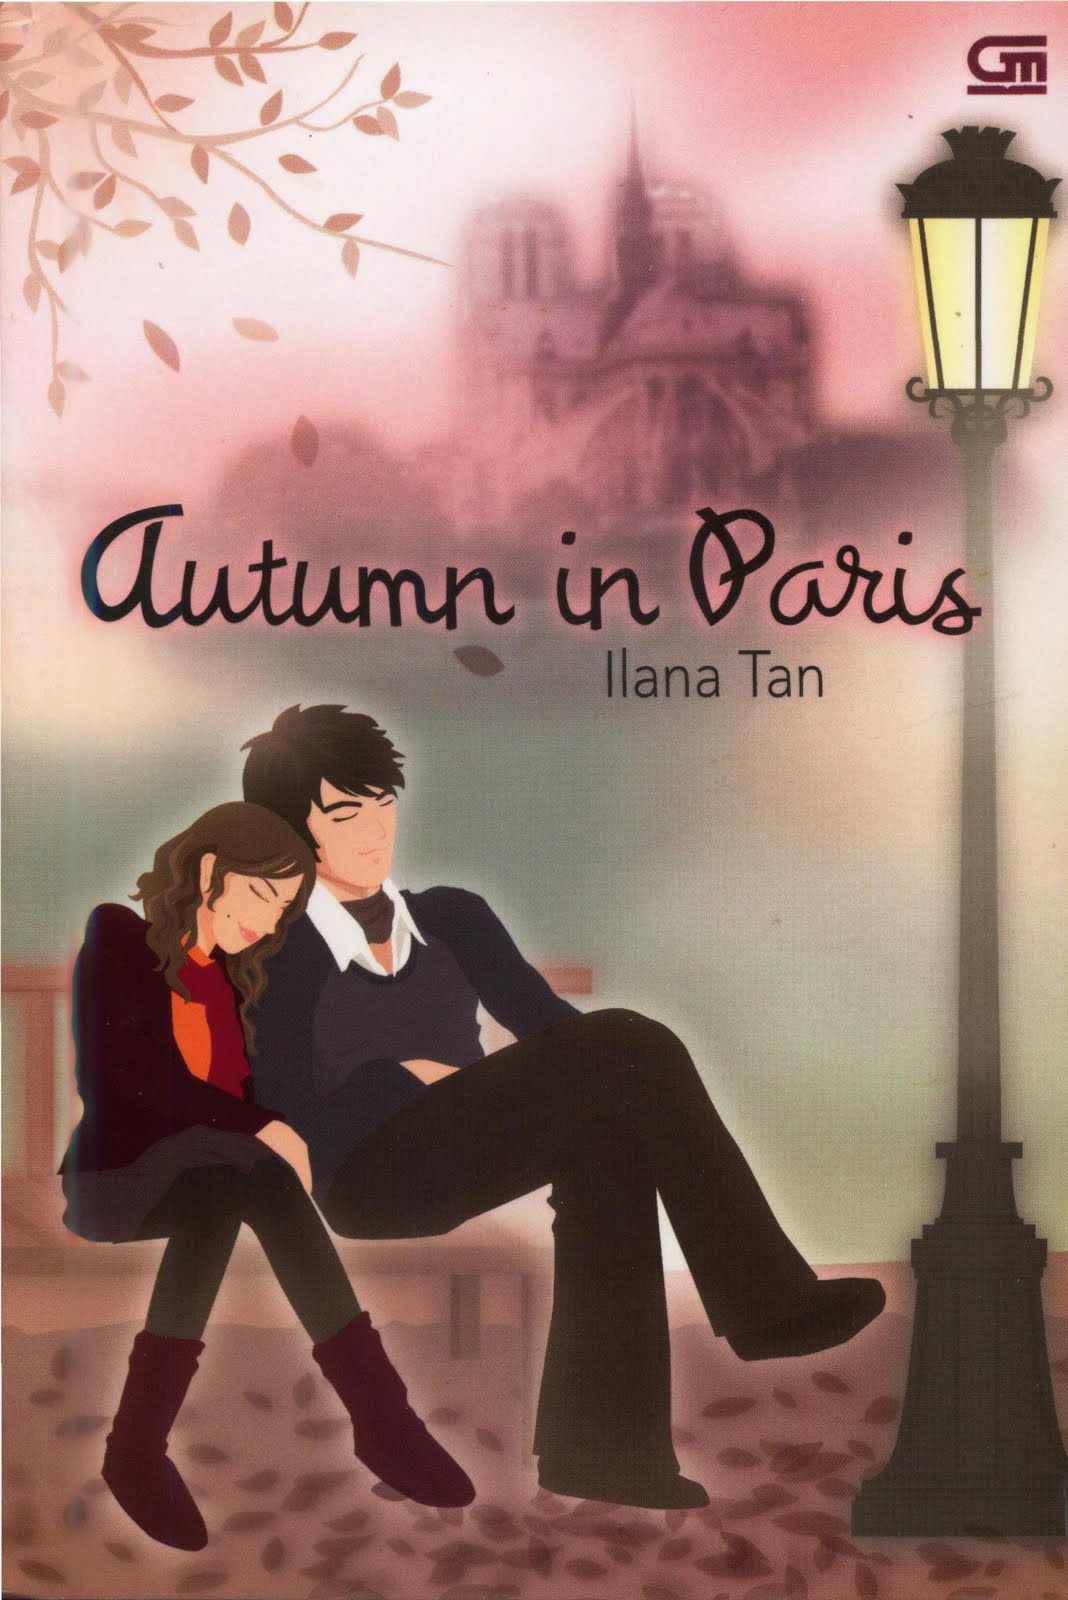 Life!: Ilana Tan - Autumn in Paris